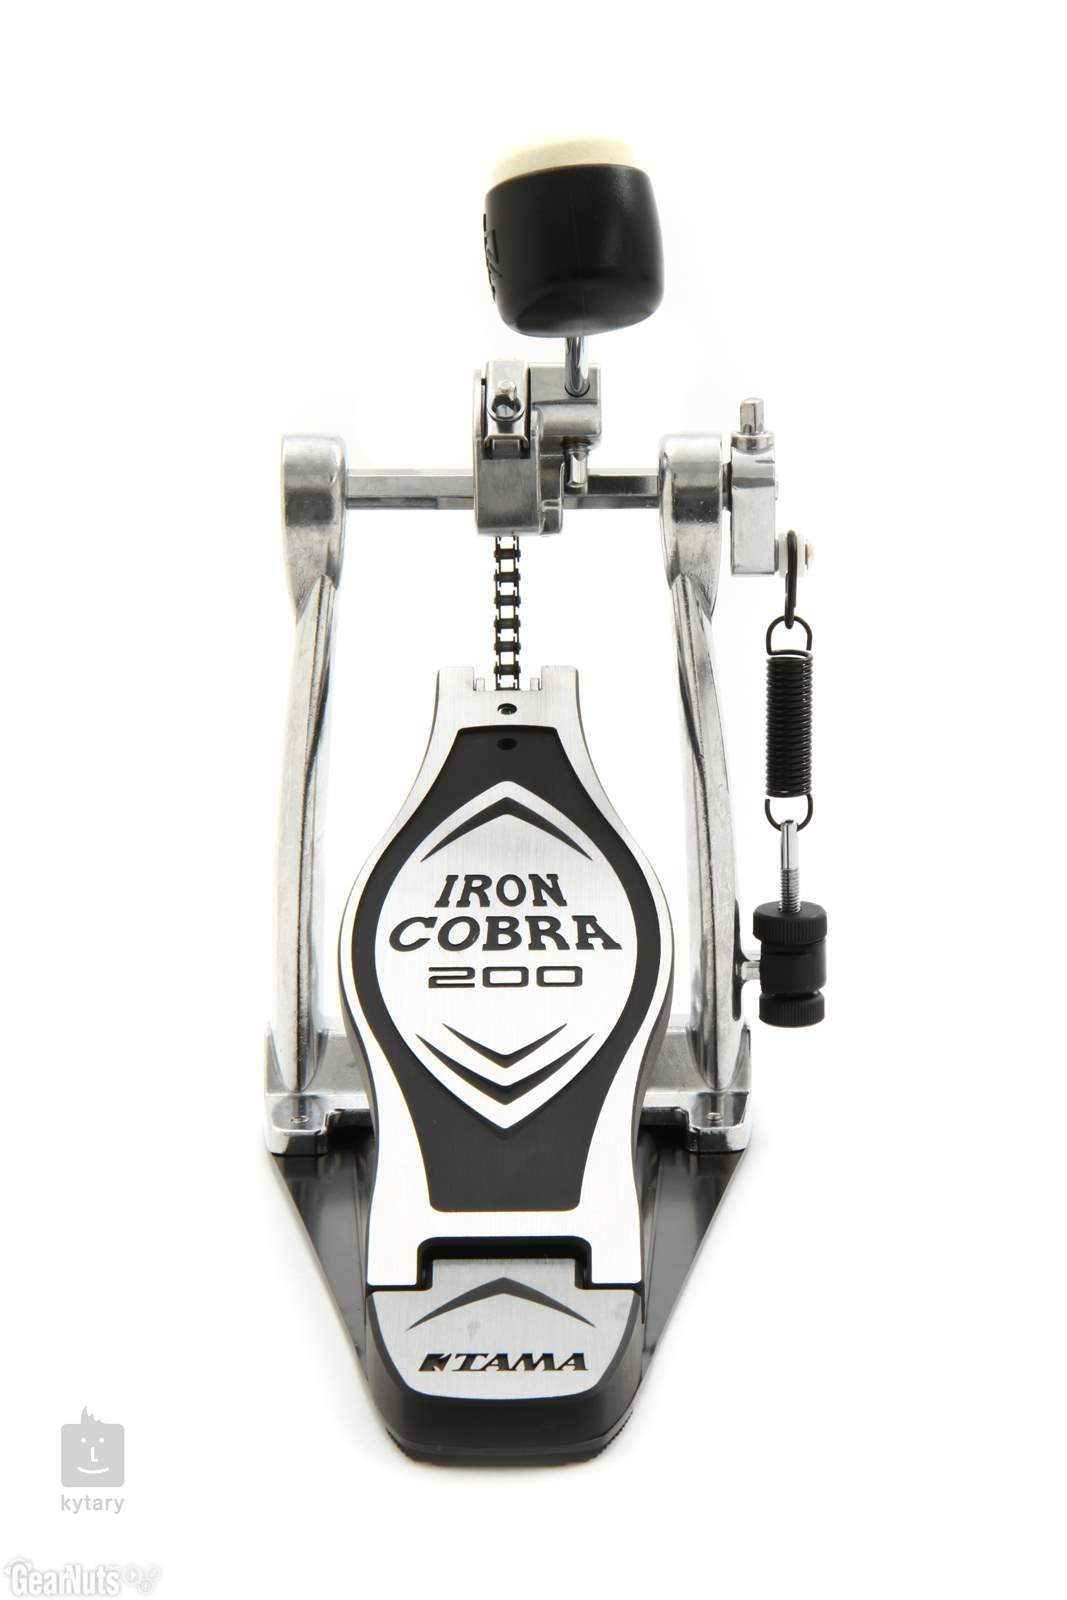 Tama cobra. Tama Iron Cobra hp200p Single Pedal. Tama Iron Cobra 200. Iron Cobra 200 педаль.